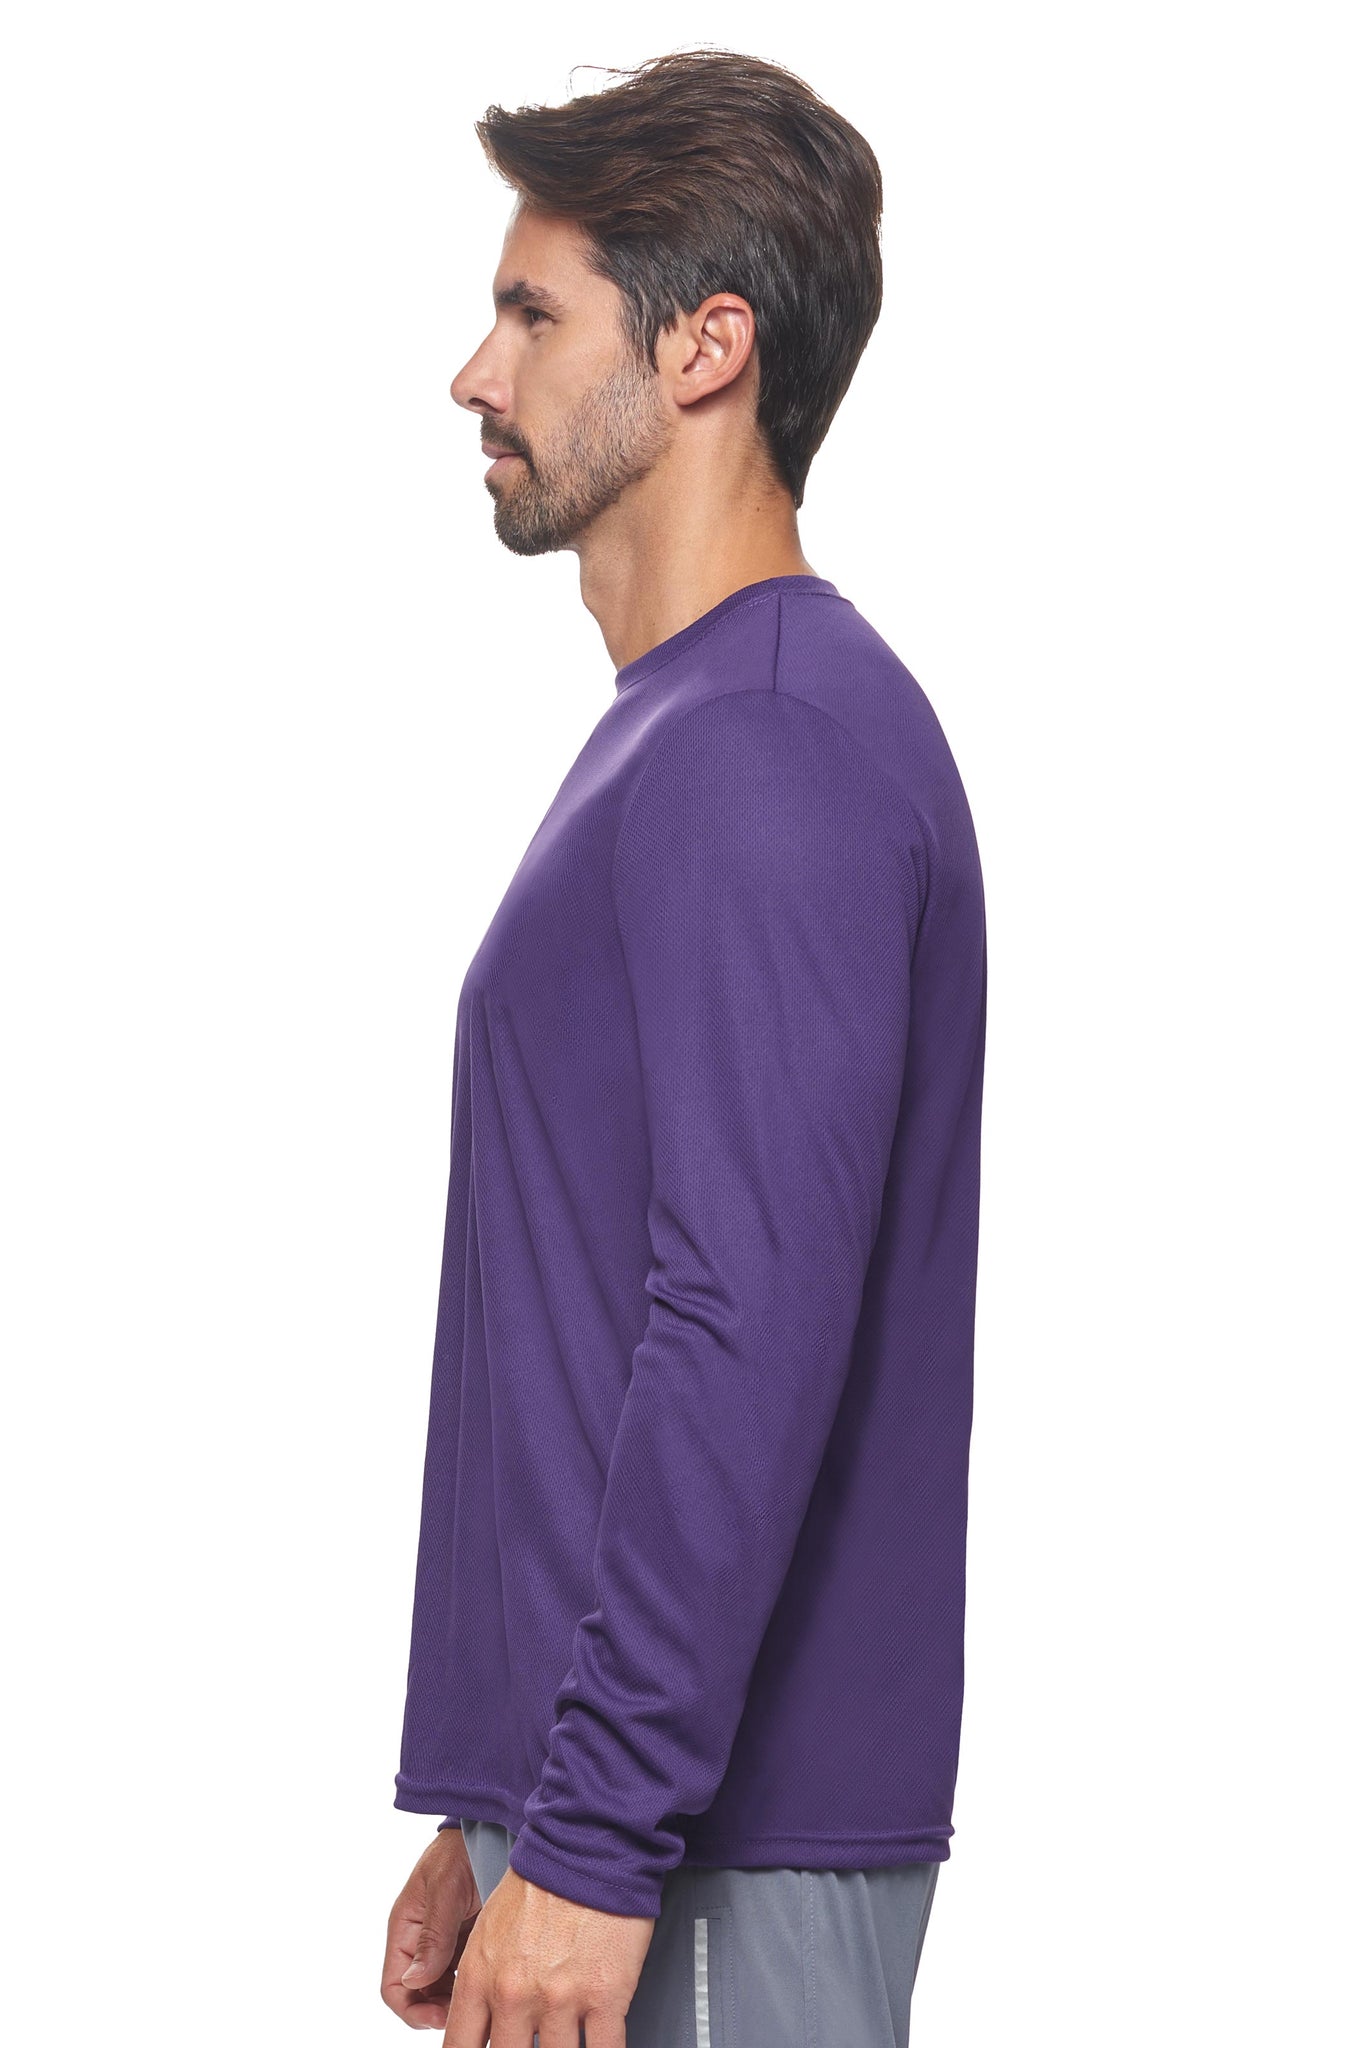 Expert Brand Wholesale Blank Made in USA Men's Long Sleeve Performance Fitness Running Tee Oxymesh™ Tec  in dark purple image 2#dark-purple